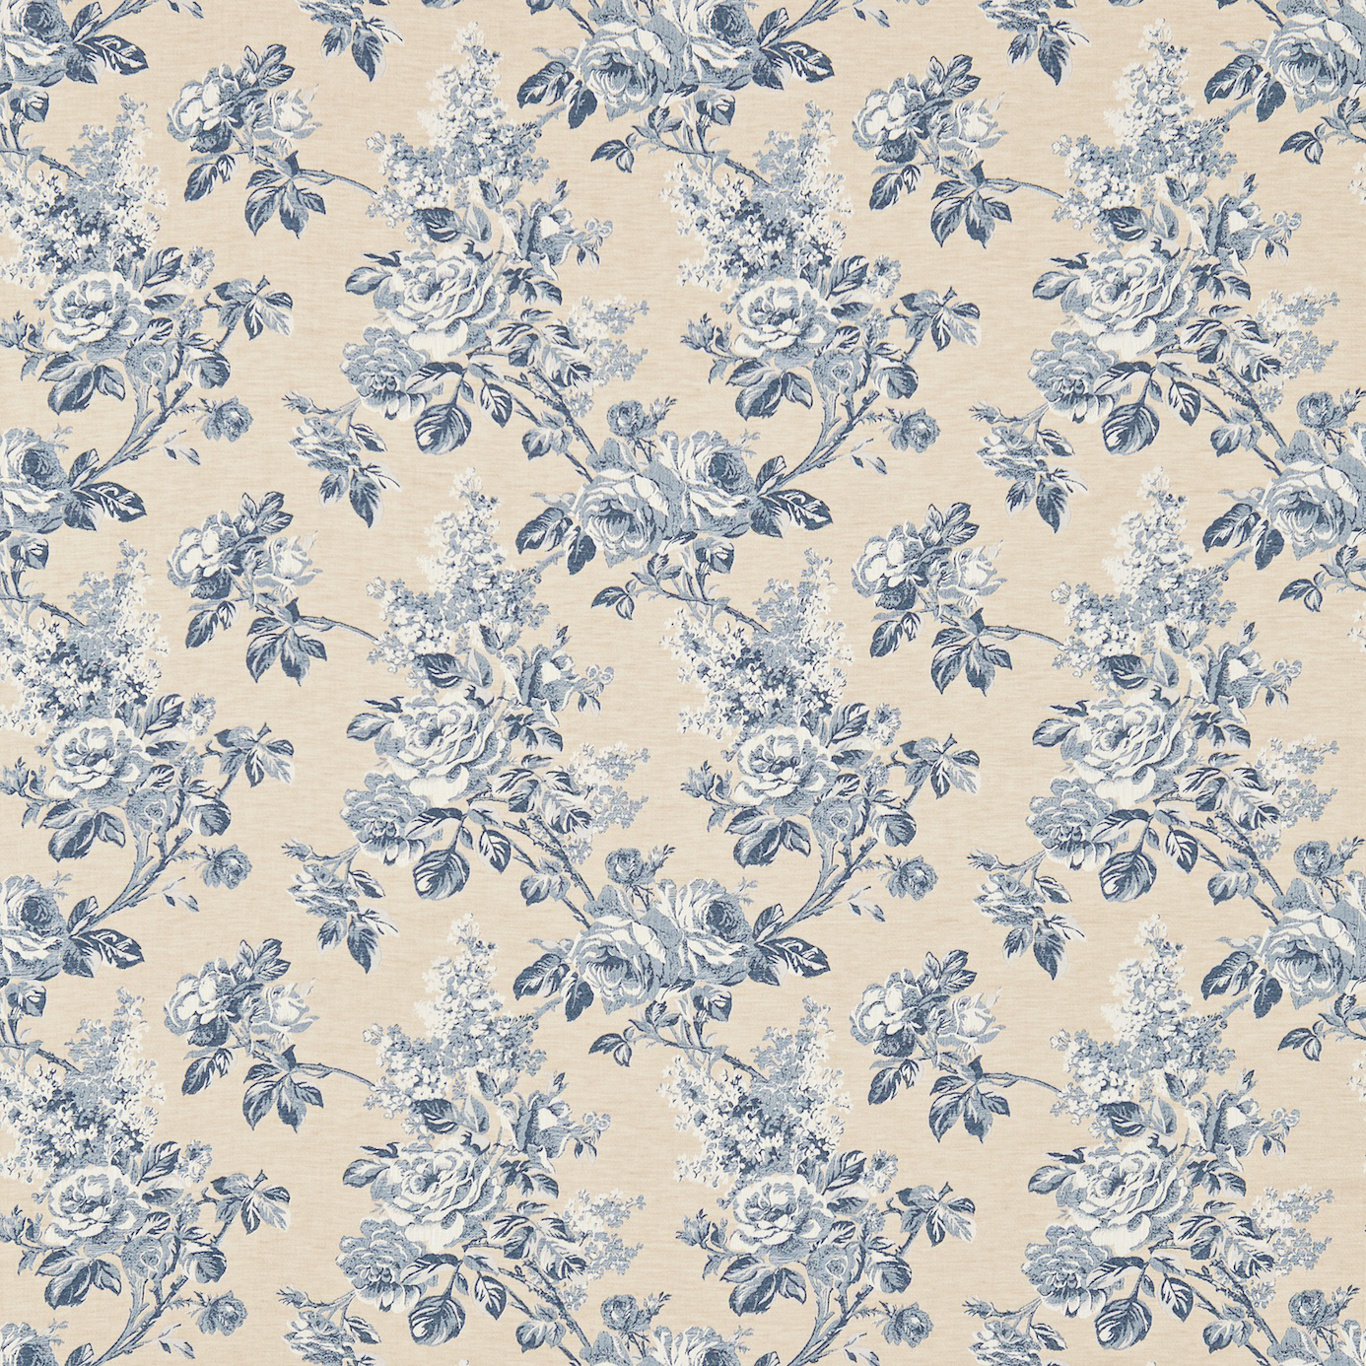 Sorilla Damask Indigo/Linen Fabric by SAN